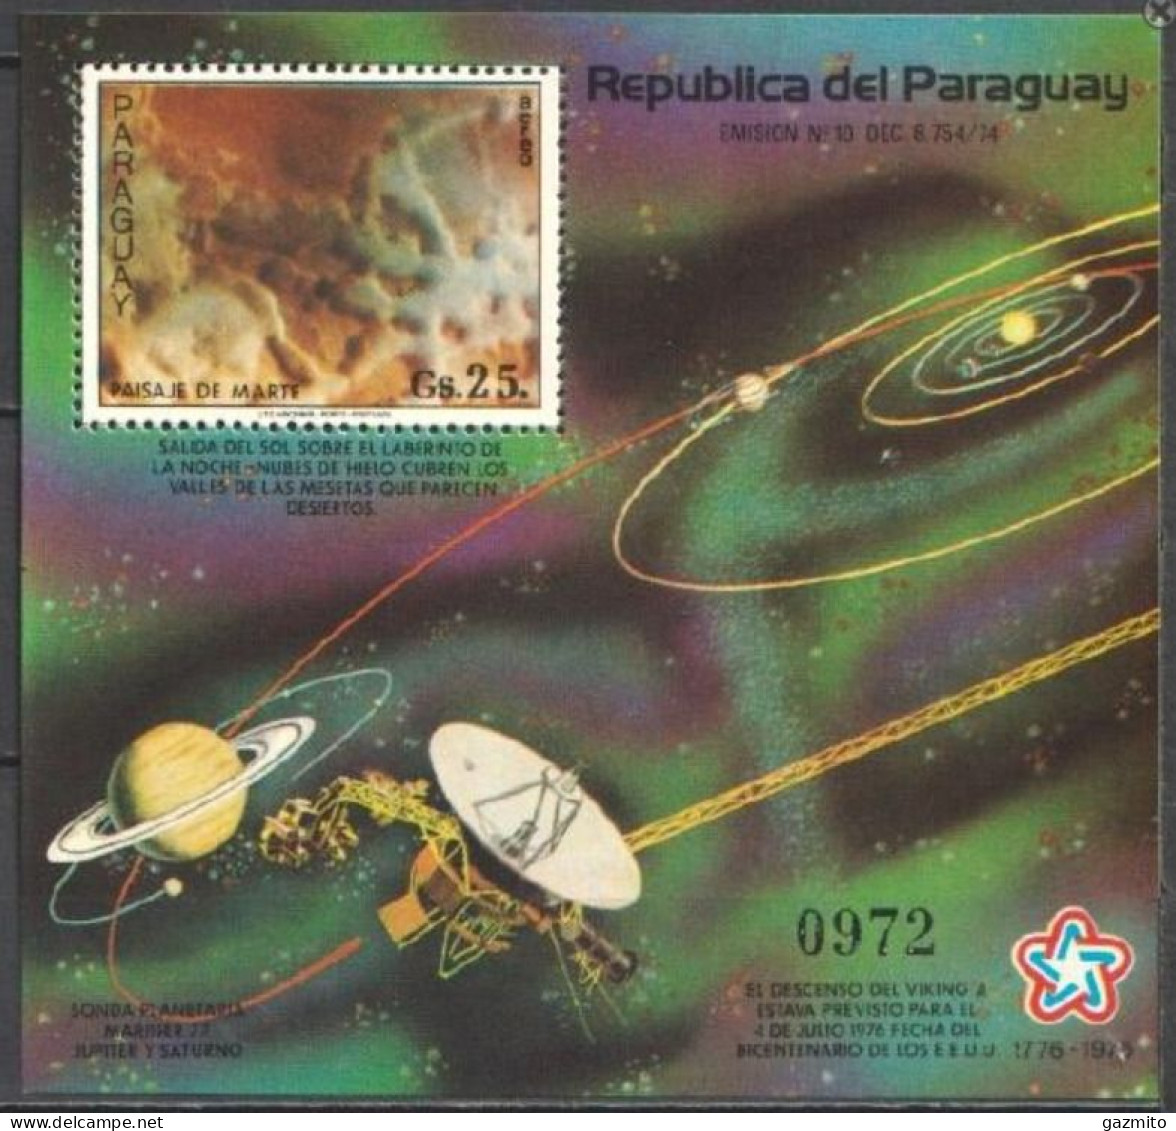 Paraguay 1976, 200th Independence USA, Mars Explorer, BF - Unabhängigkeit USA